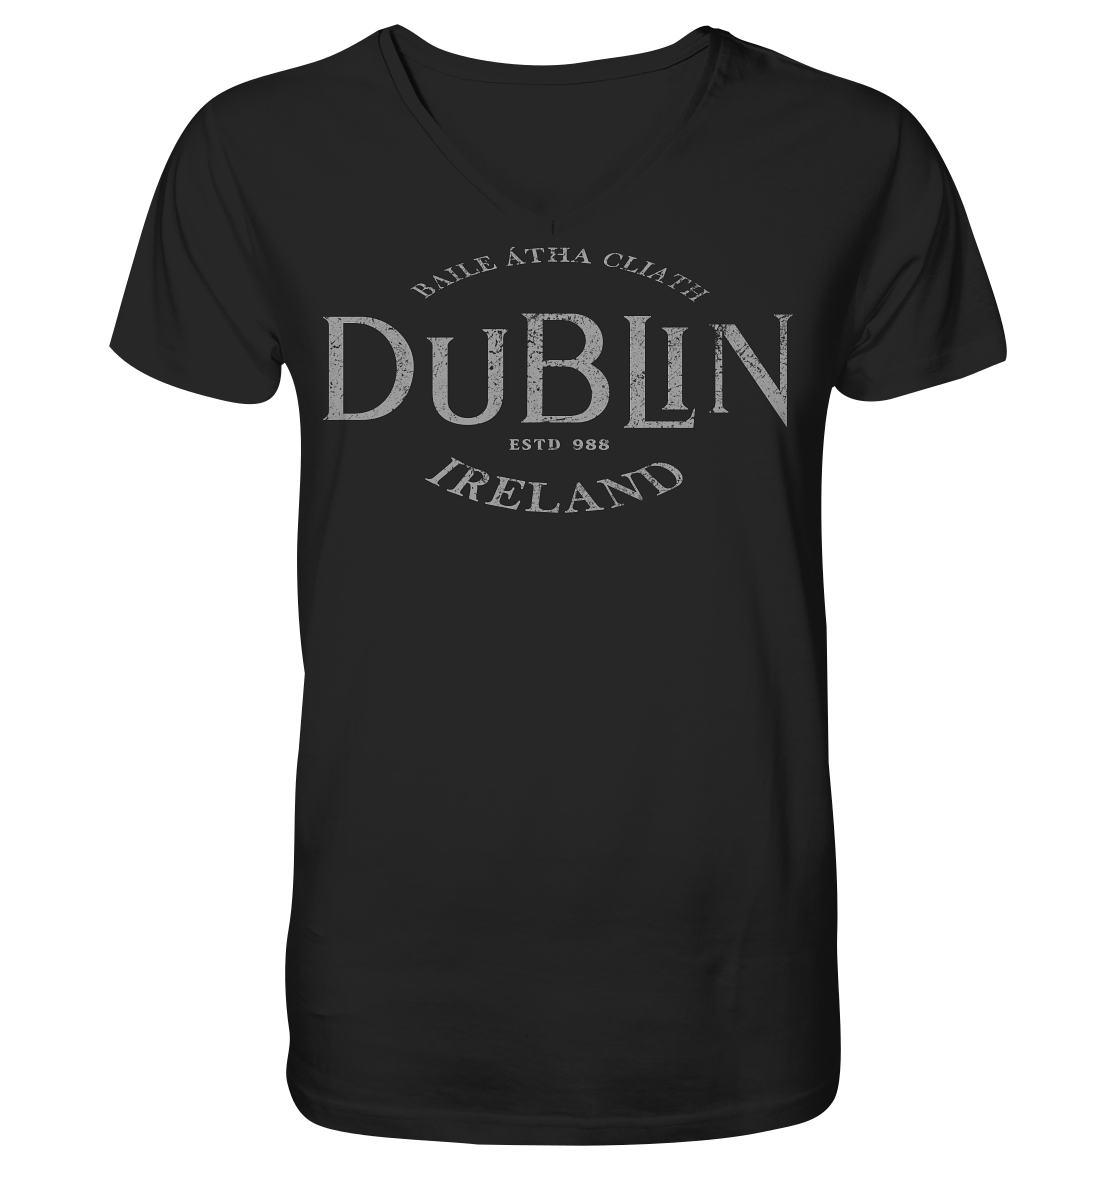 Dublin "Ireland / Baile Átha Cliath / Estd 988" - V-Neck Shirt